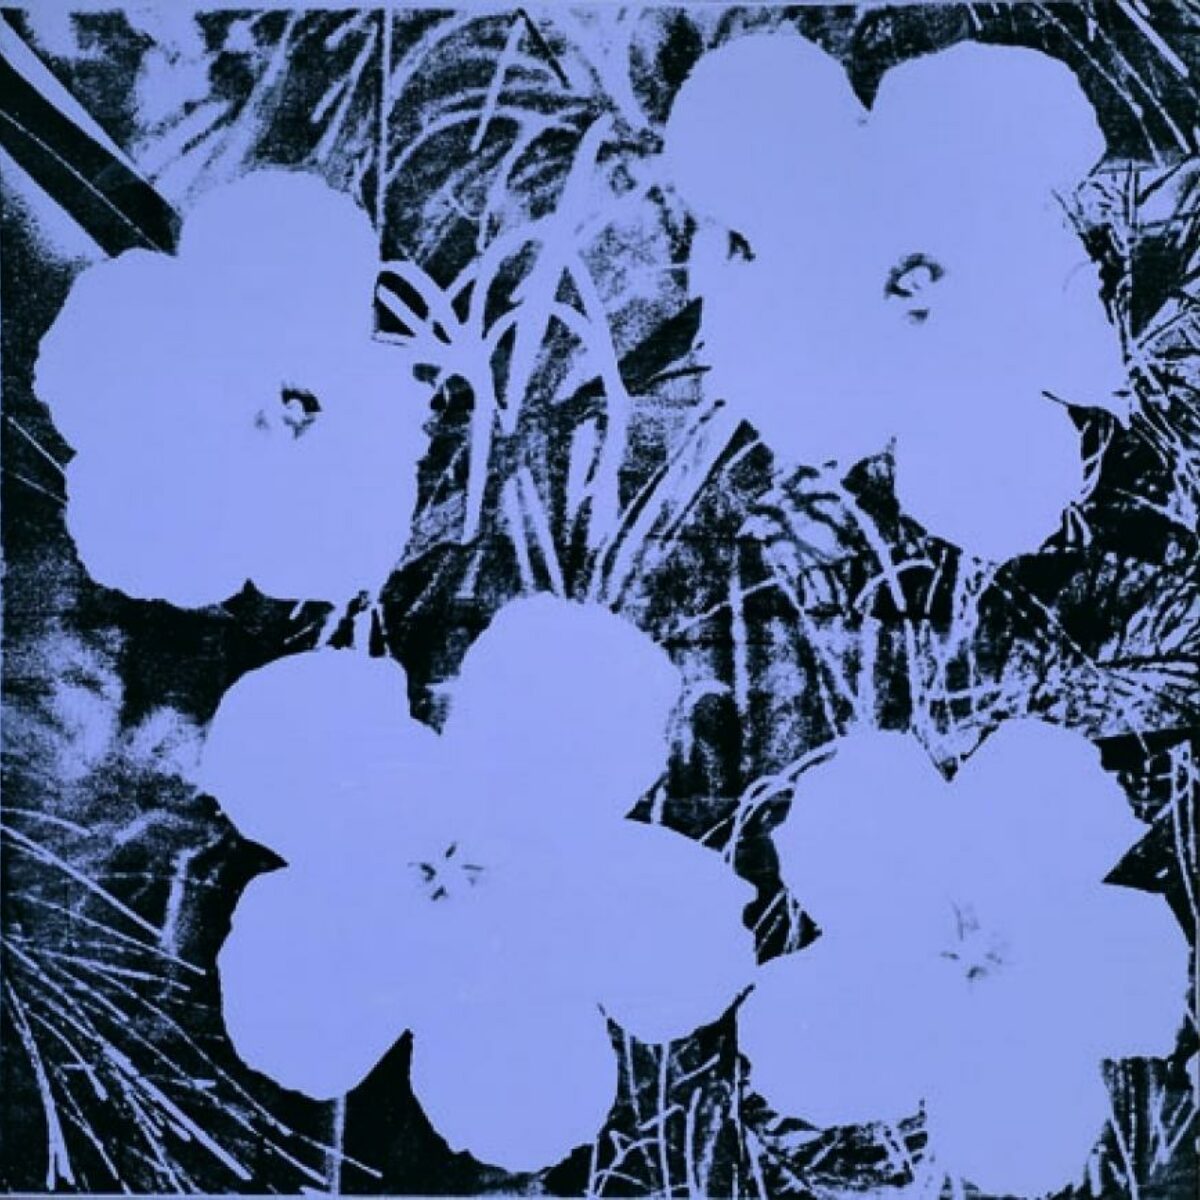 1967, Warhol flowers silkscreen, lavender ink on canvas